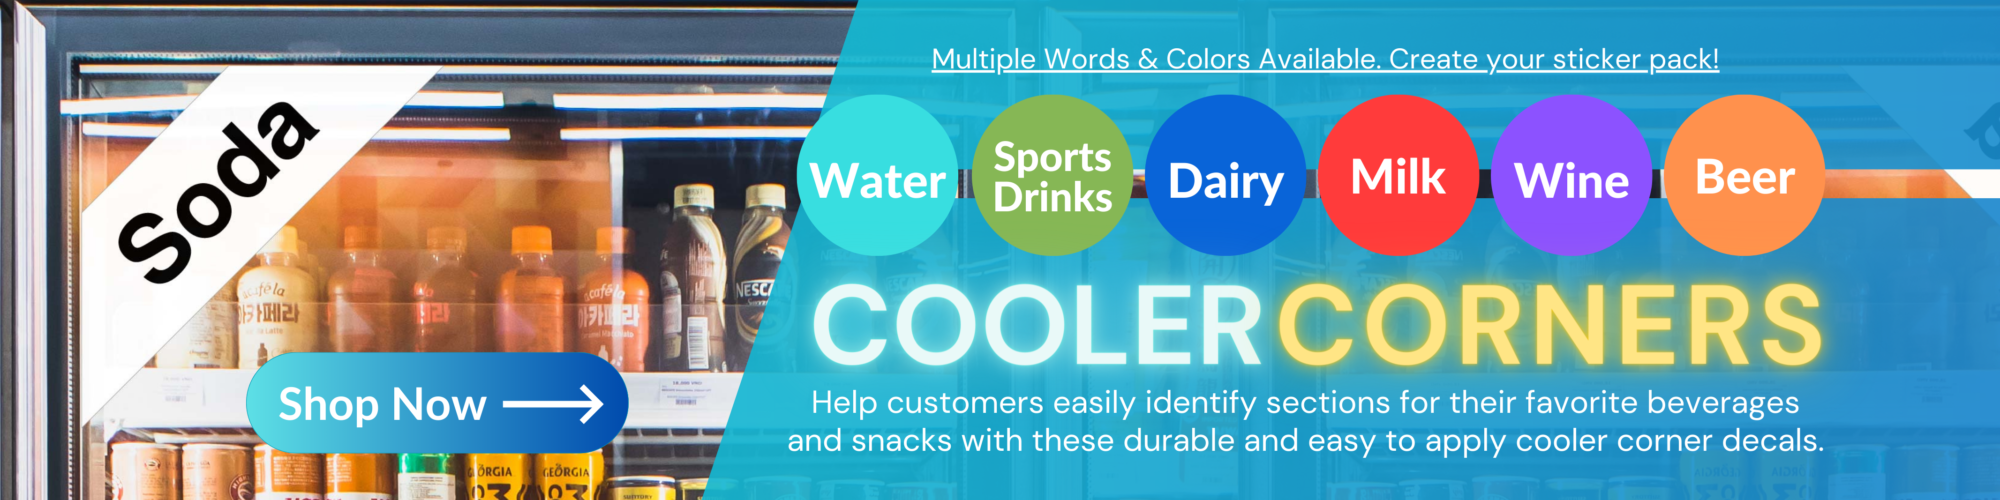 Cooler Corners Web Banners